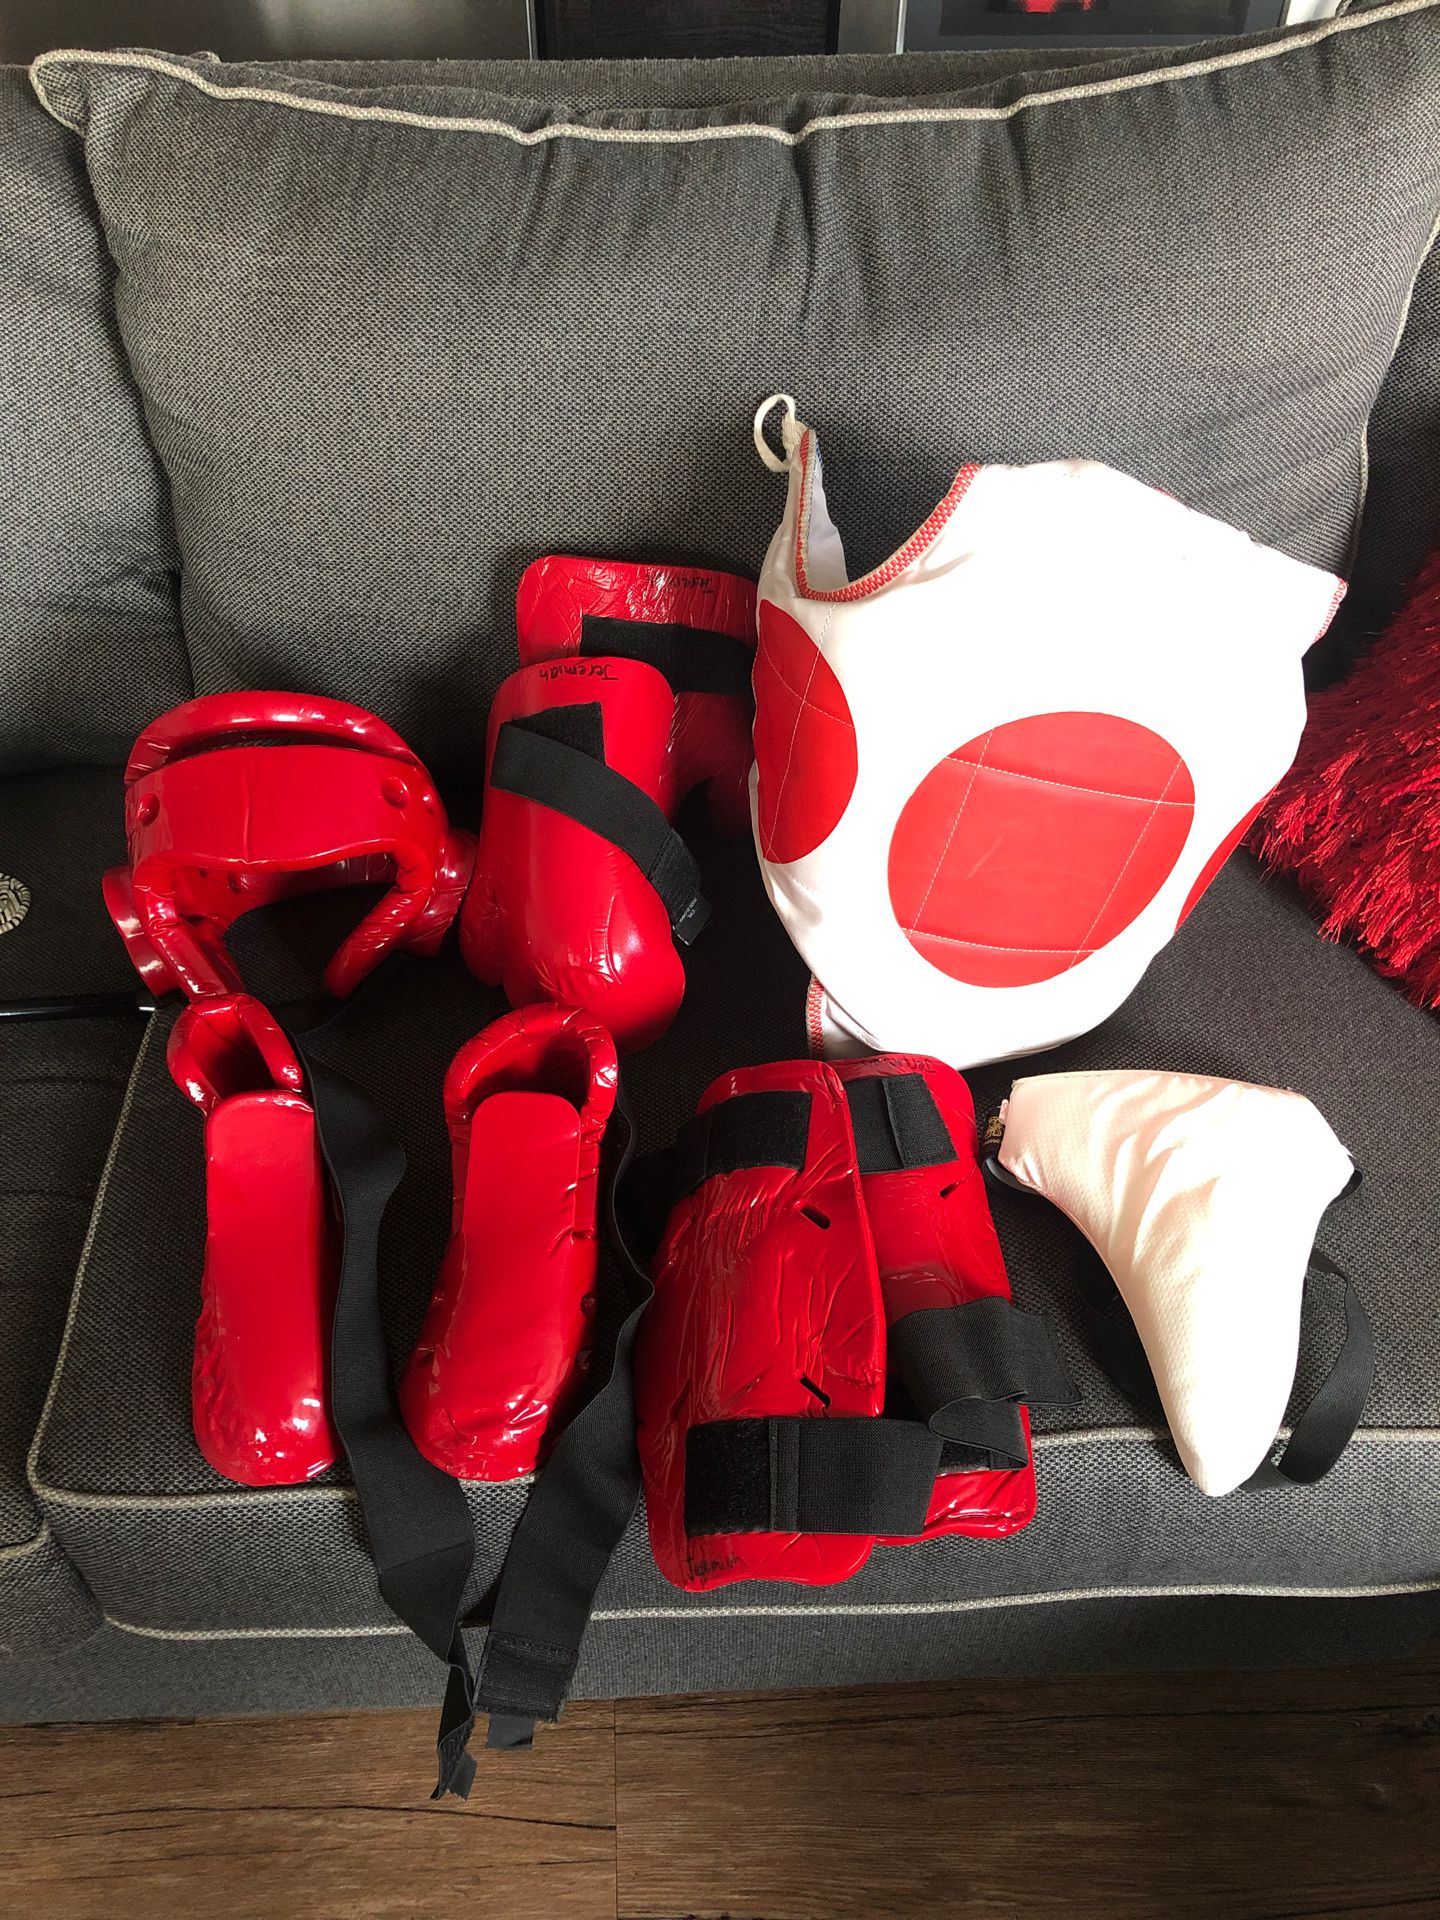 Karate gear set